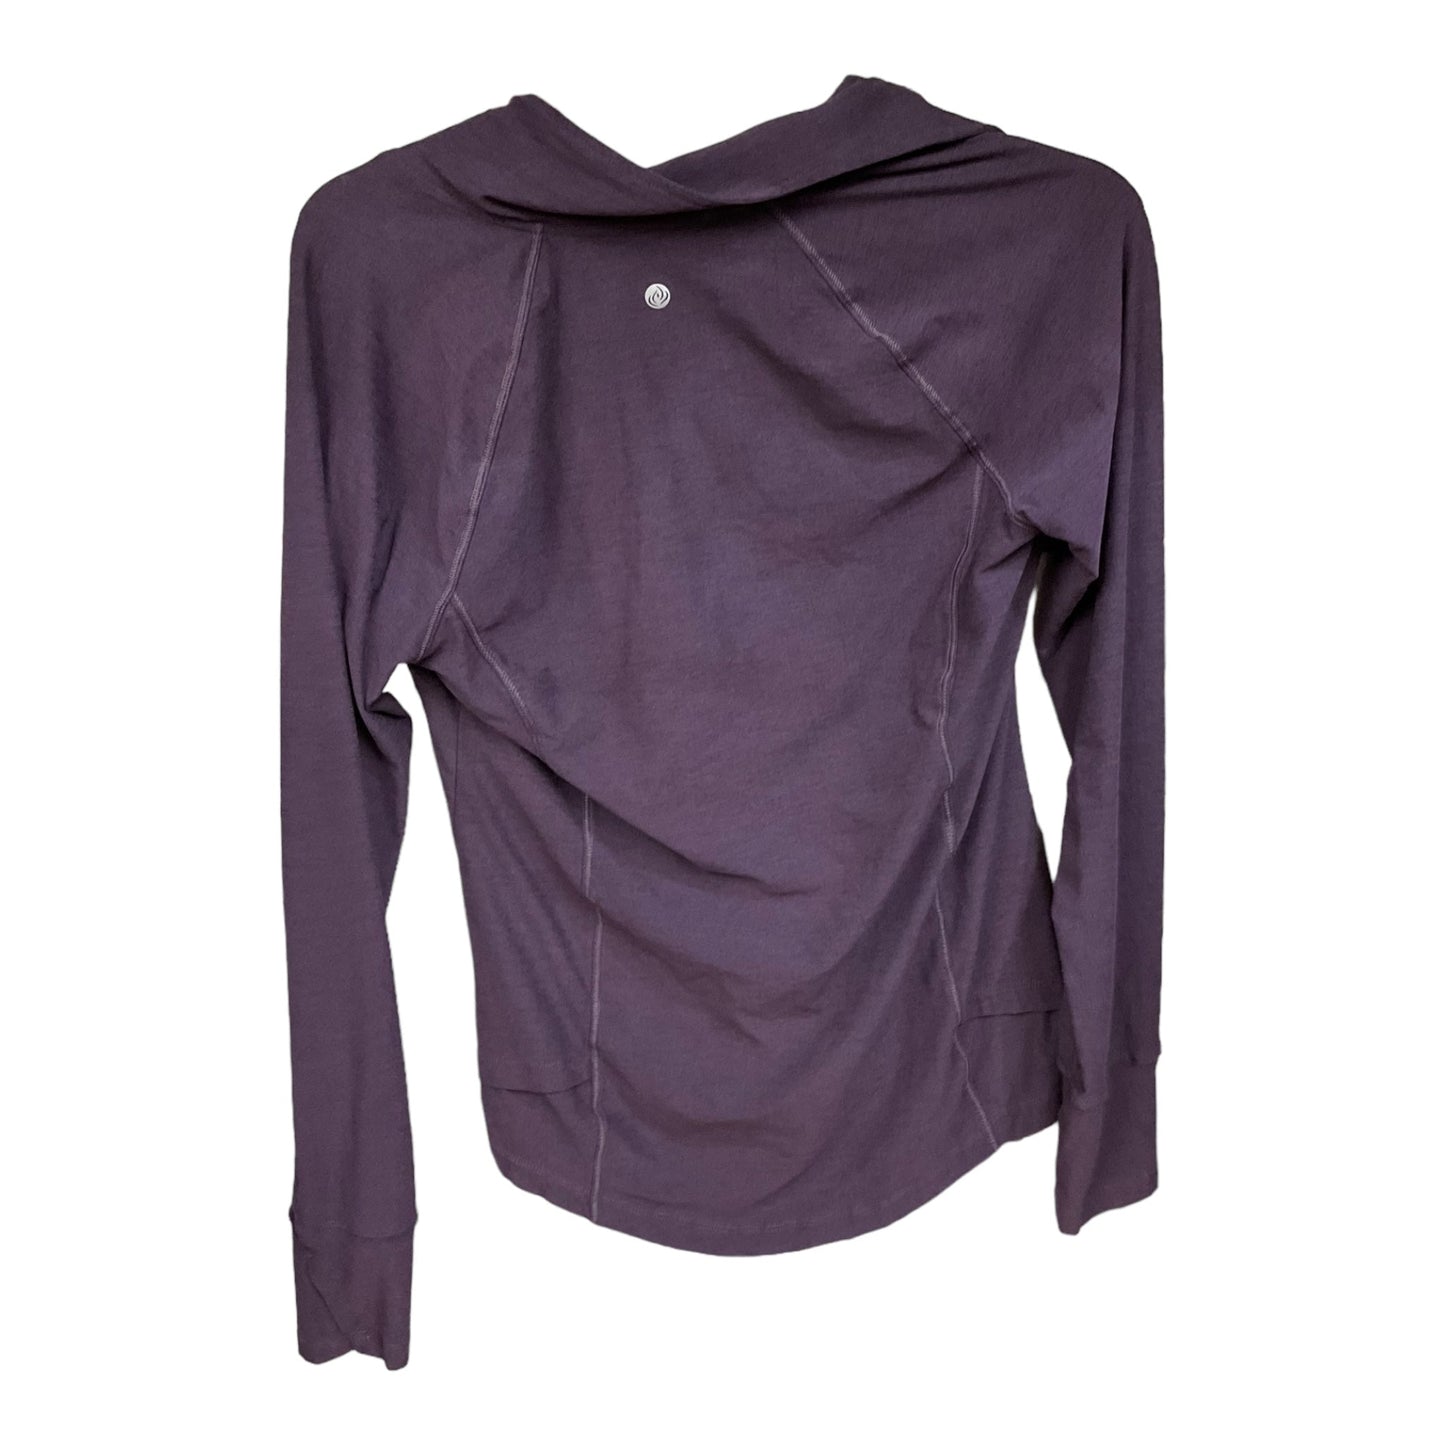 Purple Athletic Top Long Sleeve Collar Apana, Size S